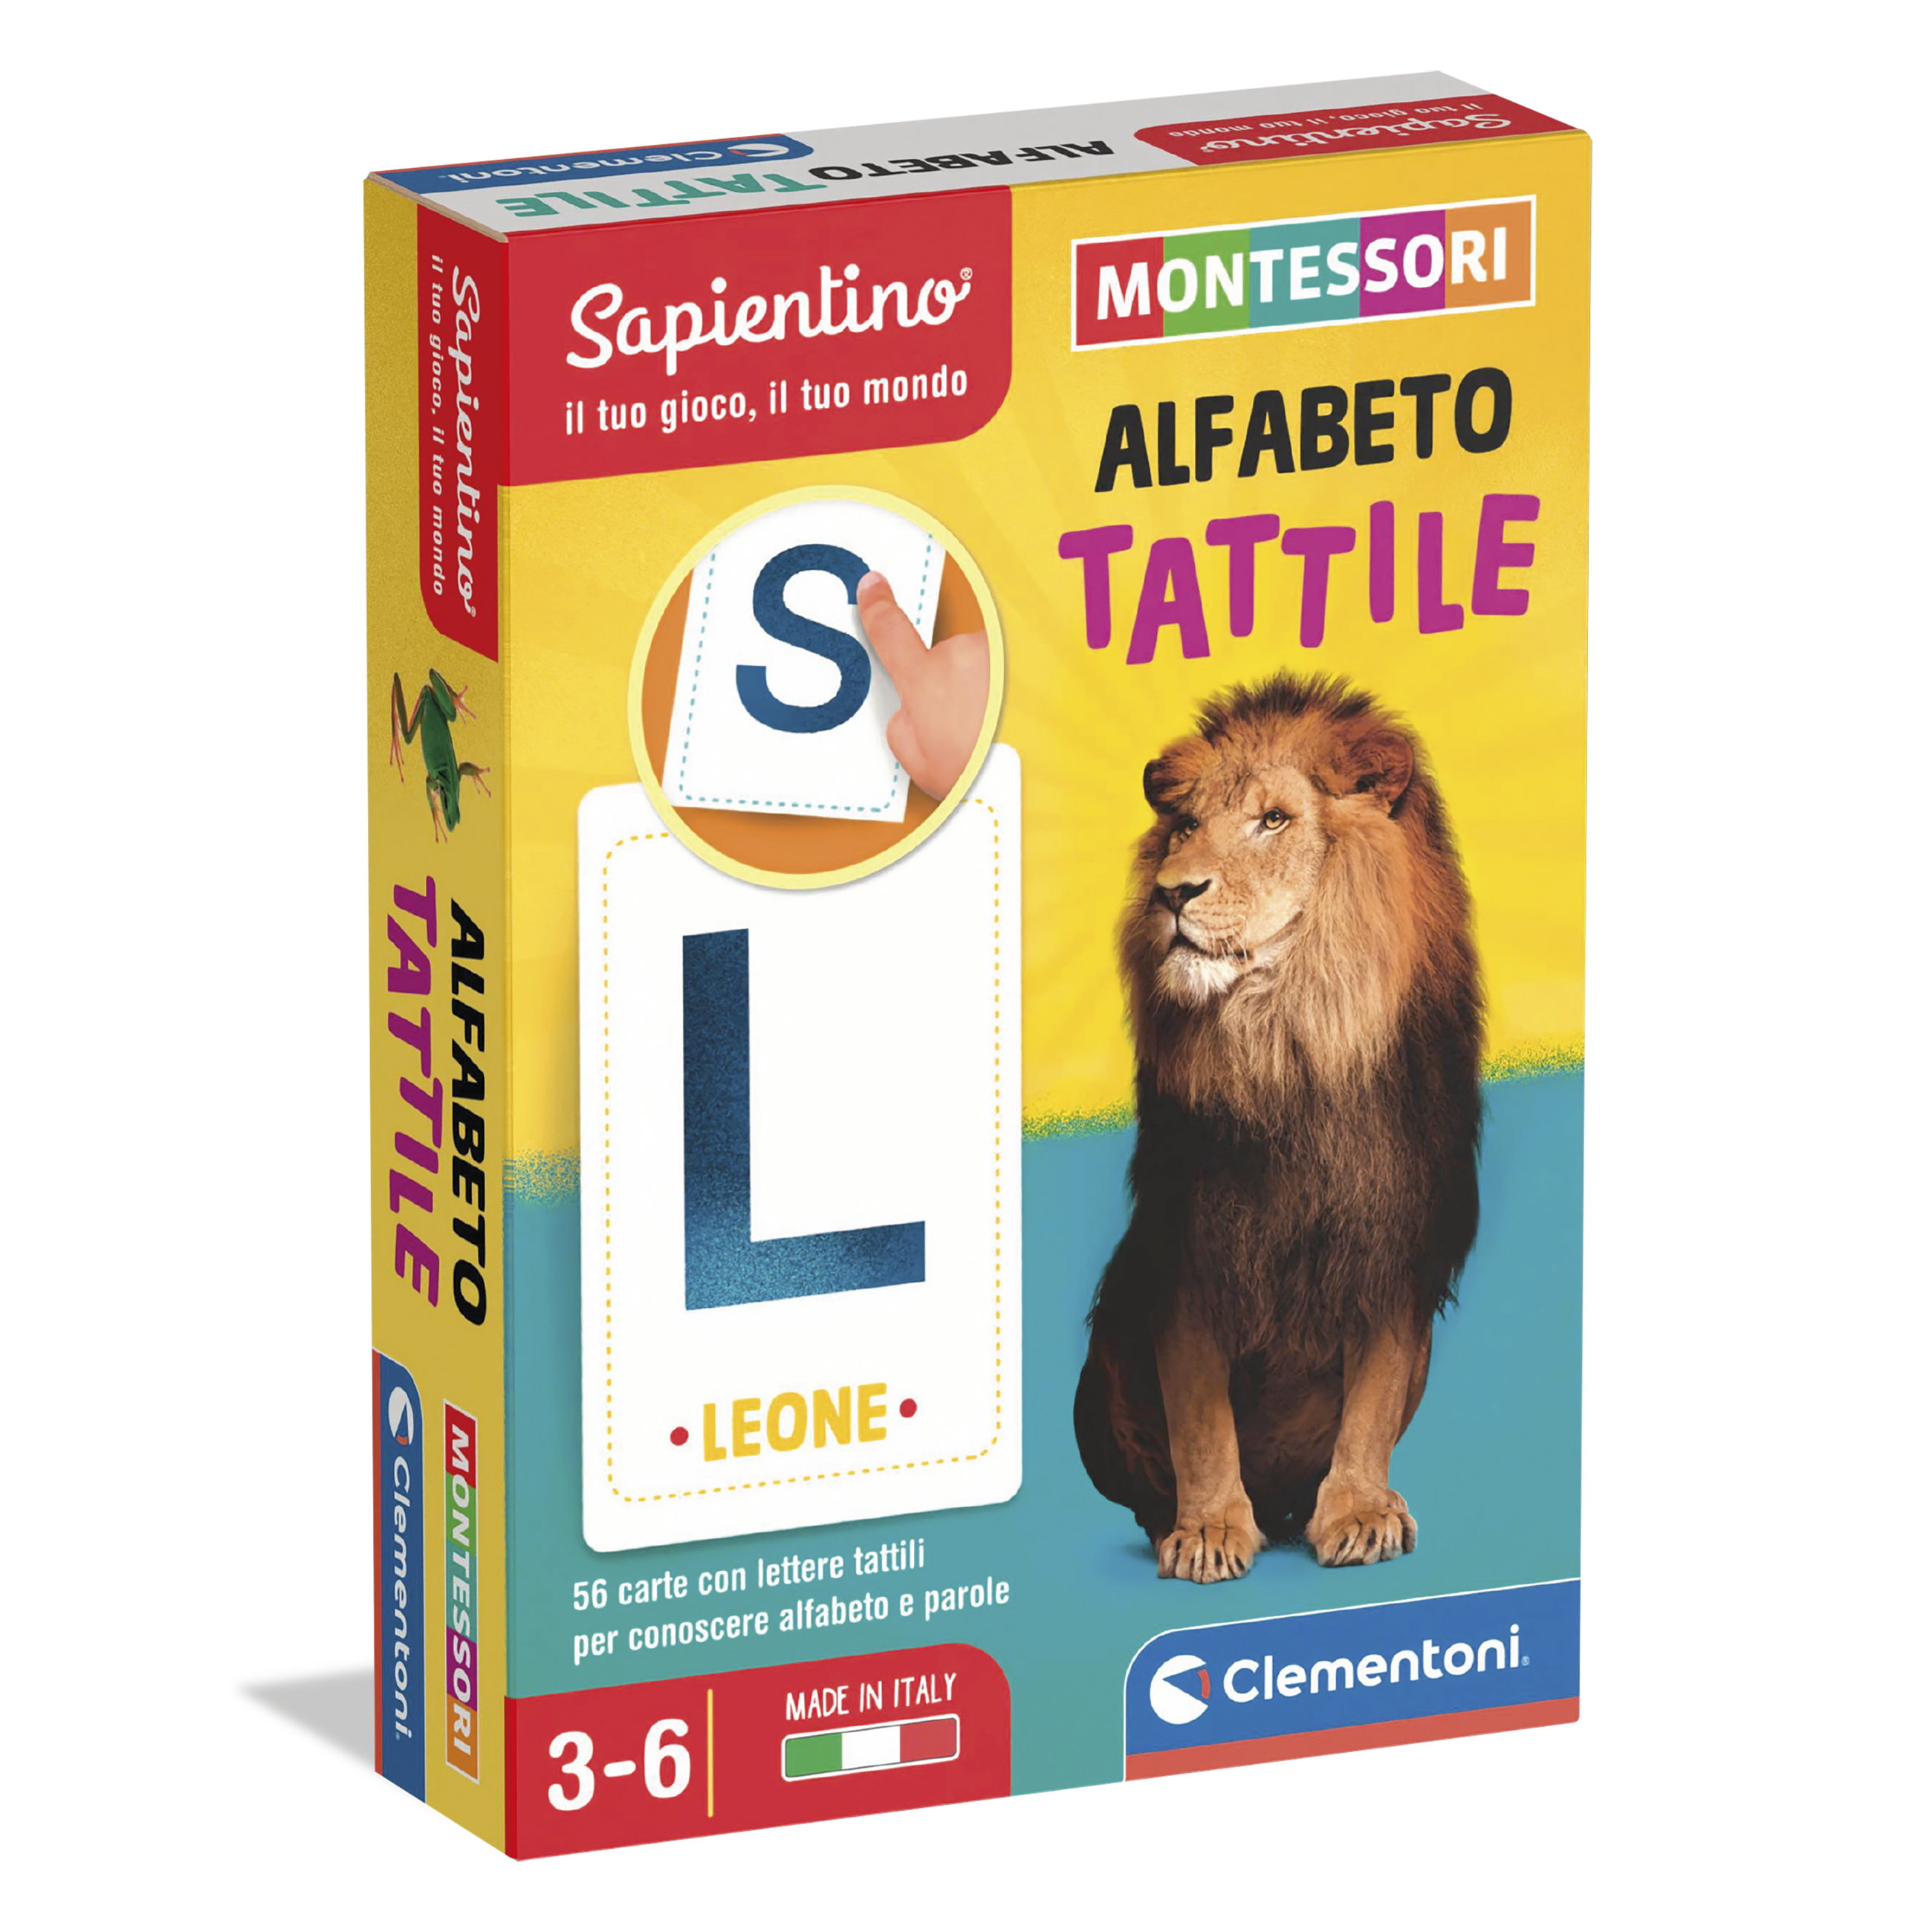 Montessori carte alfabeto tattile - SAPIENTINO